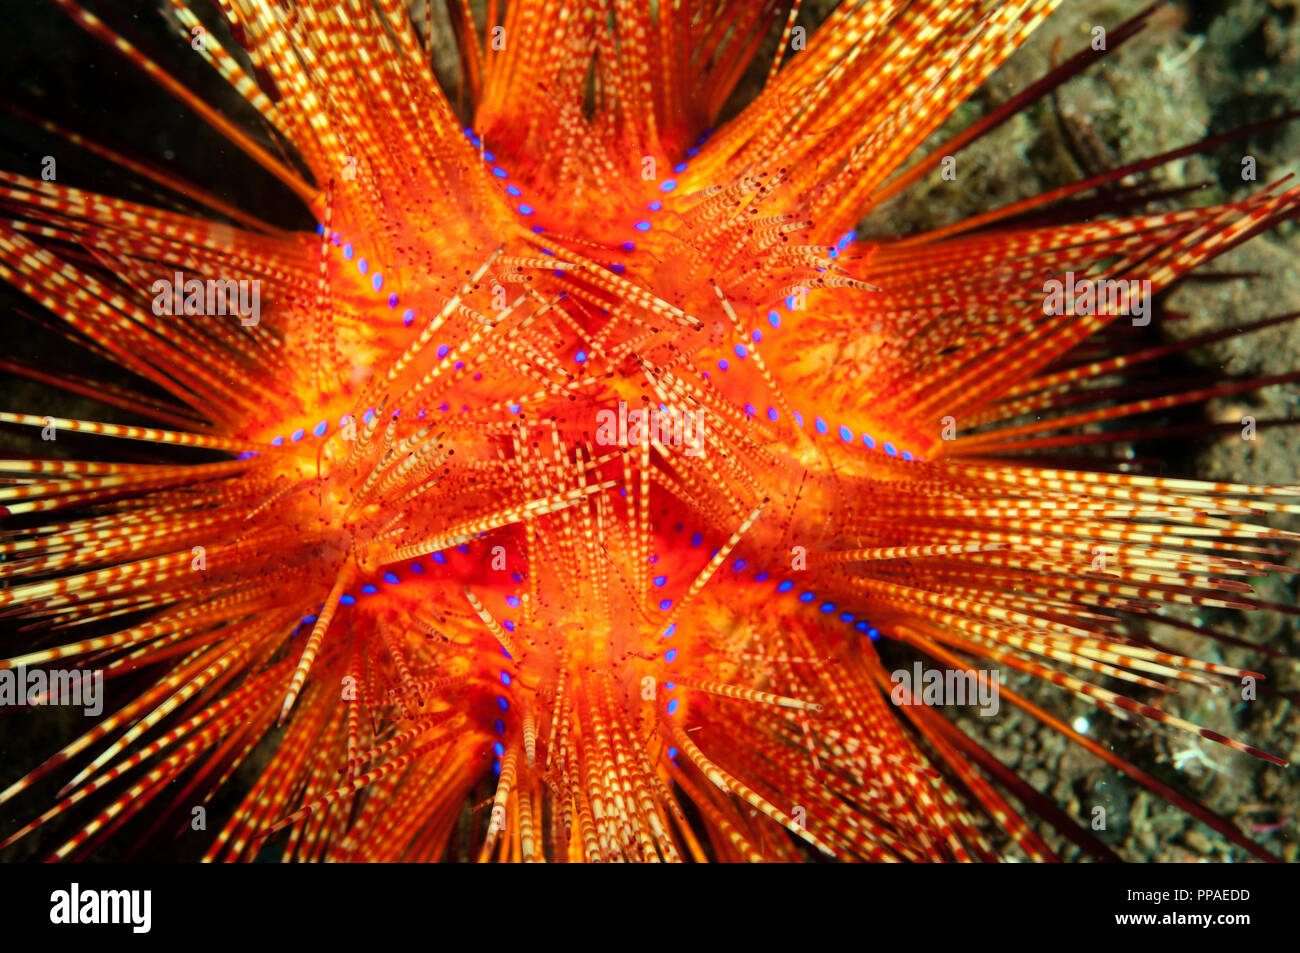 Venomous sea urchin, Astropyga radiata, Bali Indonesia. Stock Photo